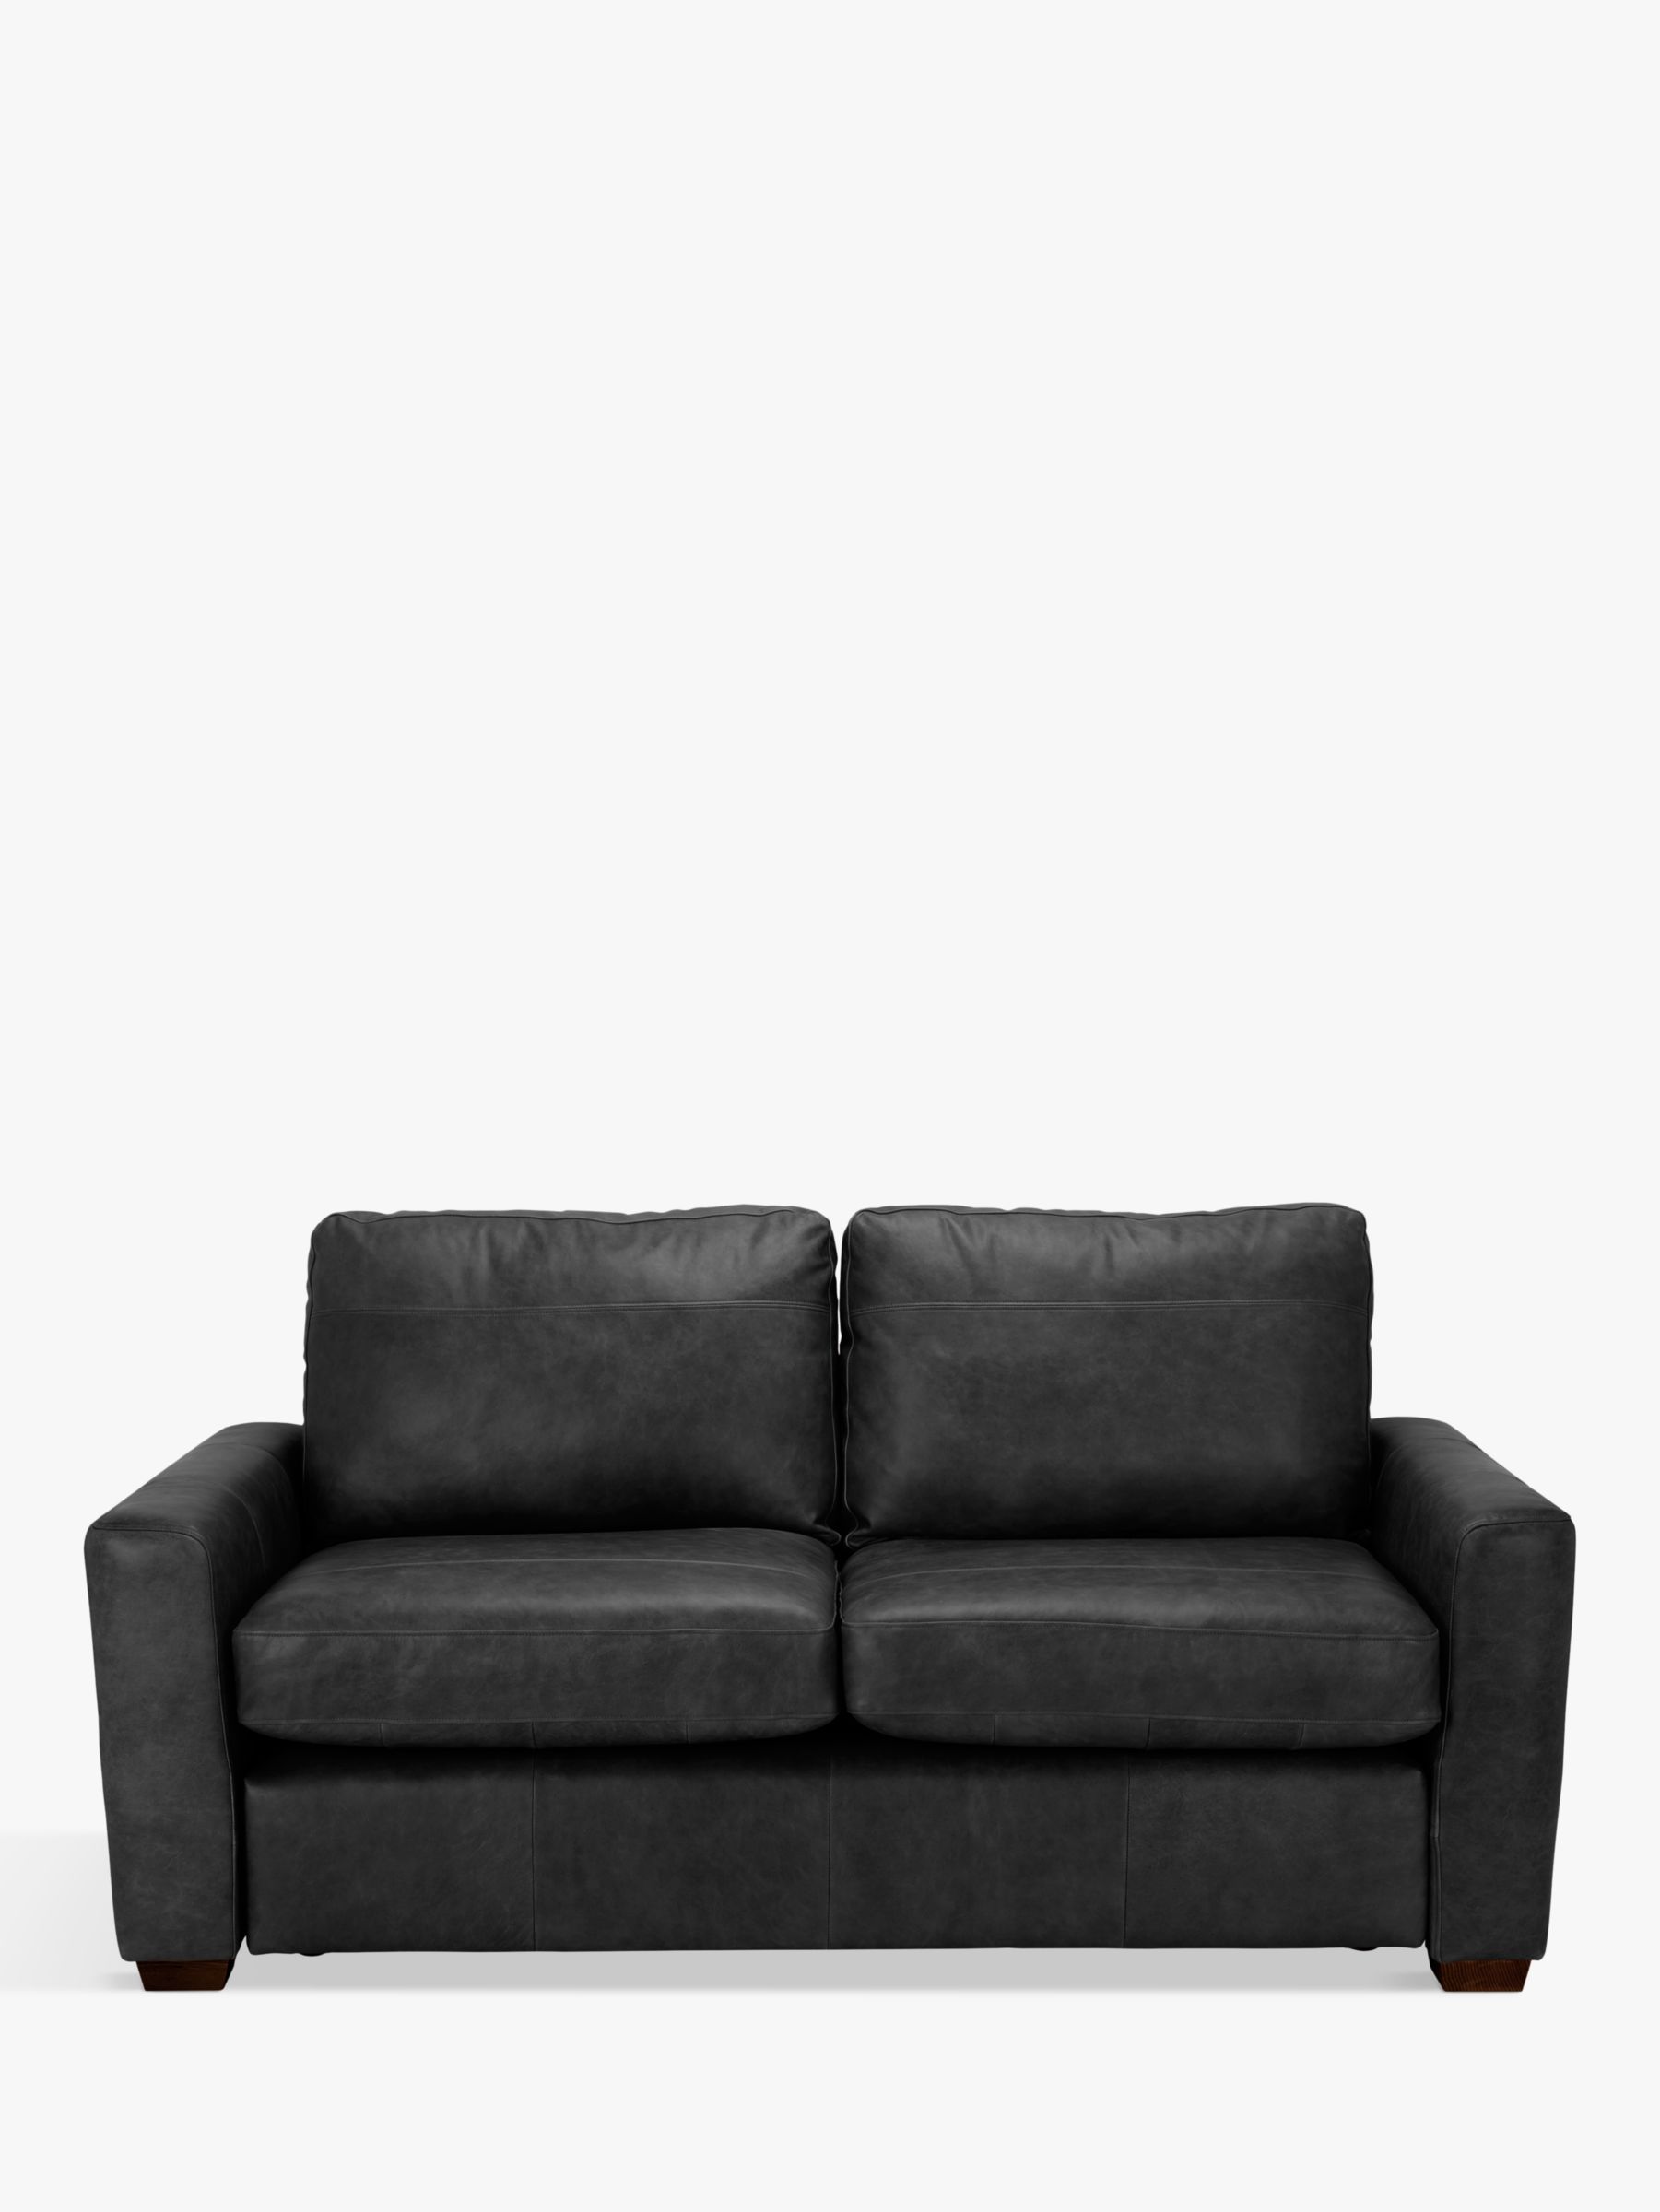 Oliver Range, John Lewis Oliver Medium 2 Seater Leather Sofa, Dark Leg, Contempo Black